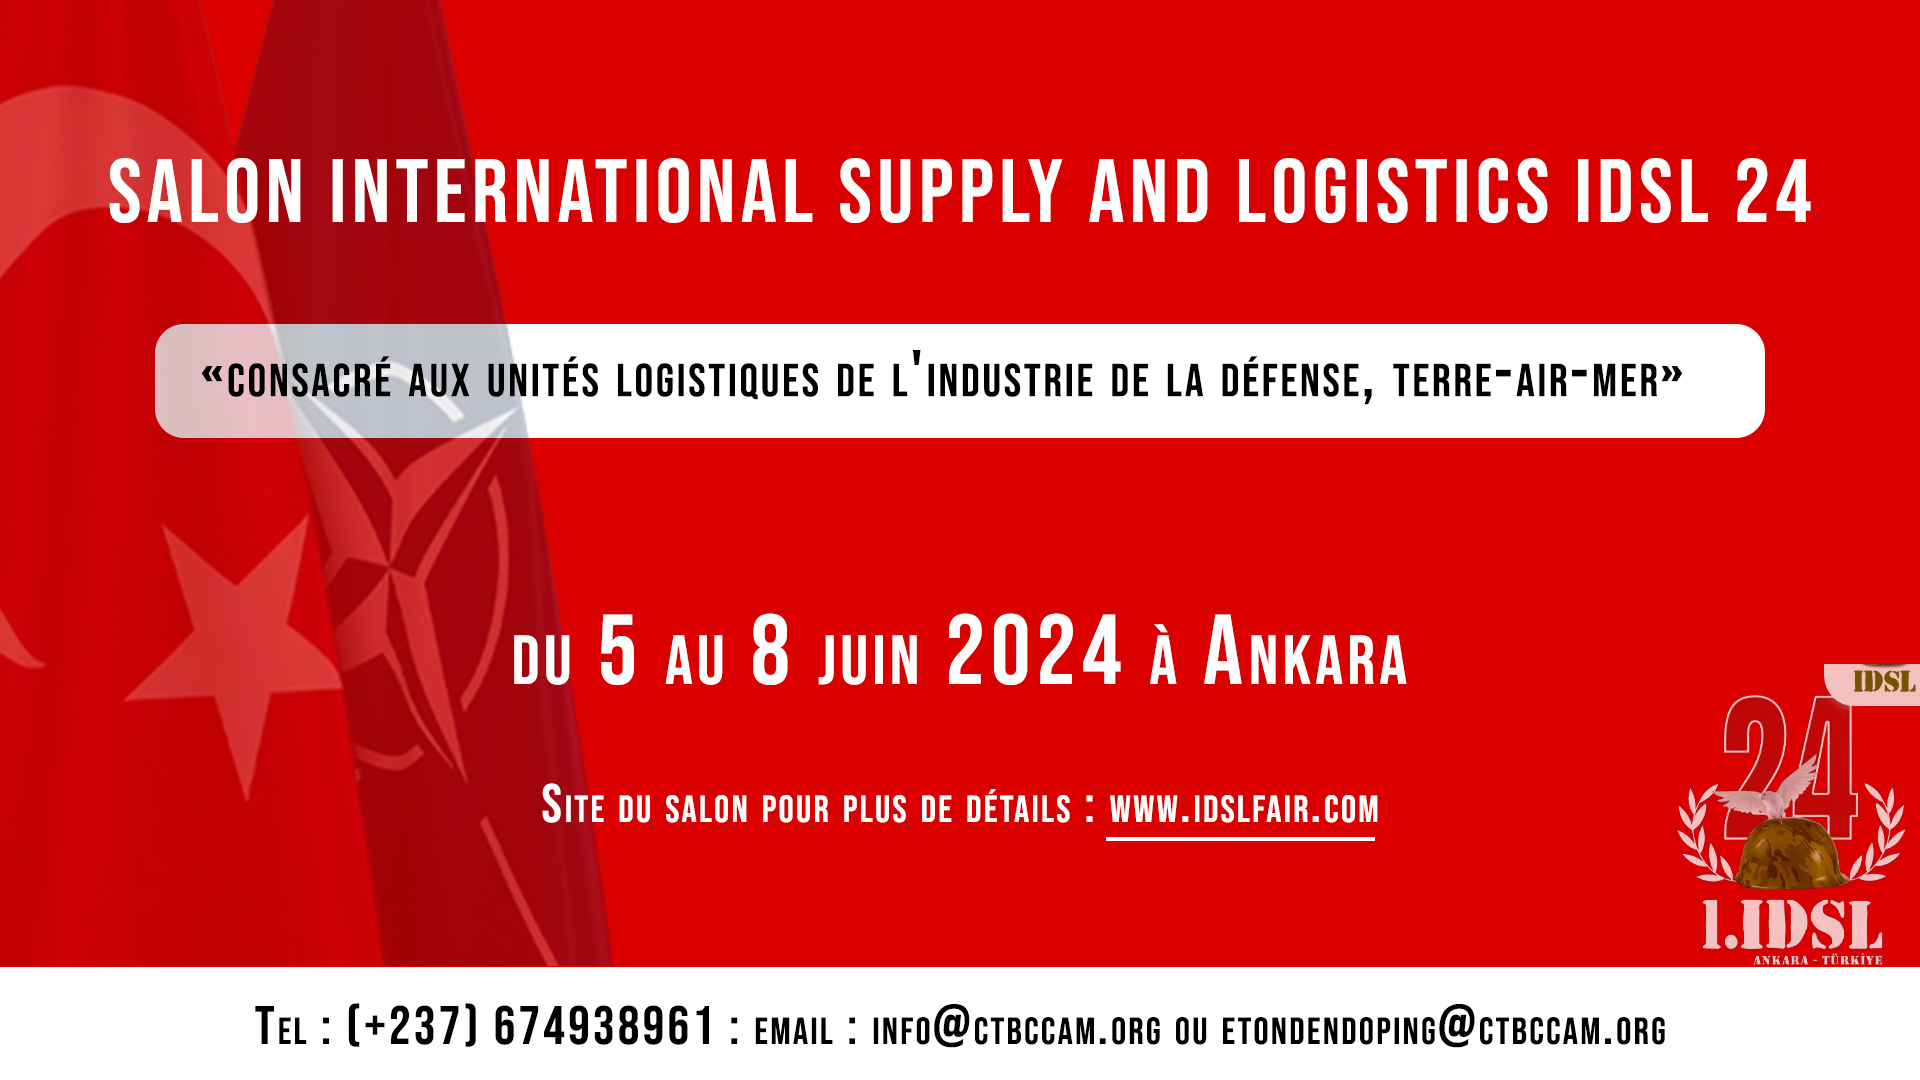 International Defense Supply Logistics Exhibition - IDSL 2024